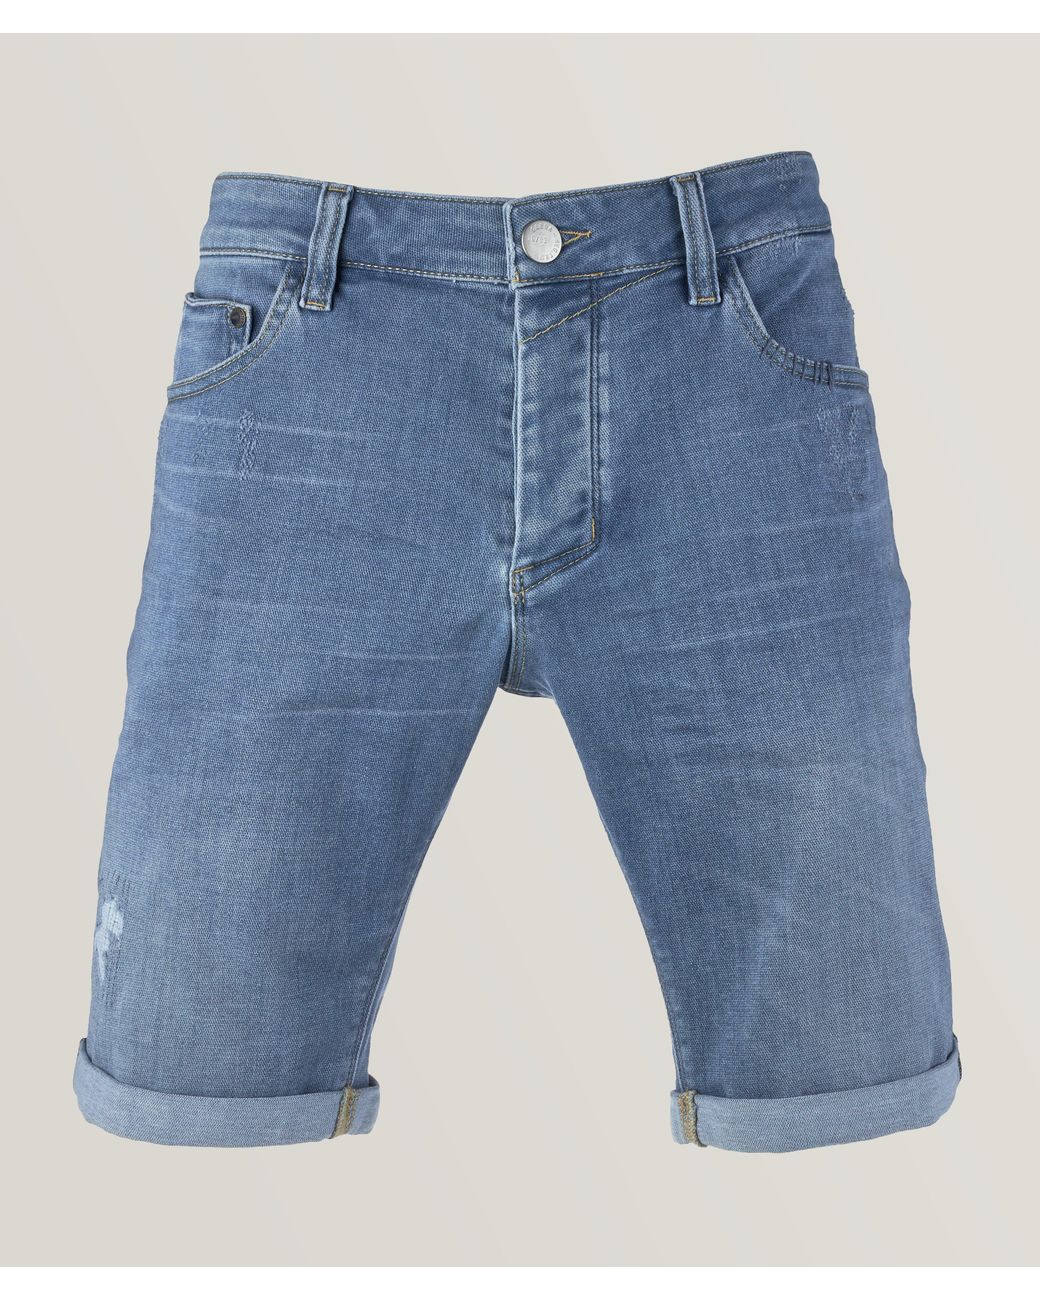 Gabba Jason Cotton-blend Jean Shorts in Blue for Men | Lyst Canada